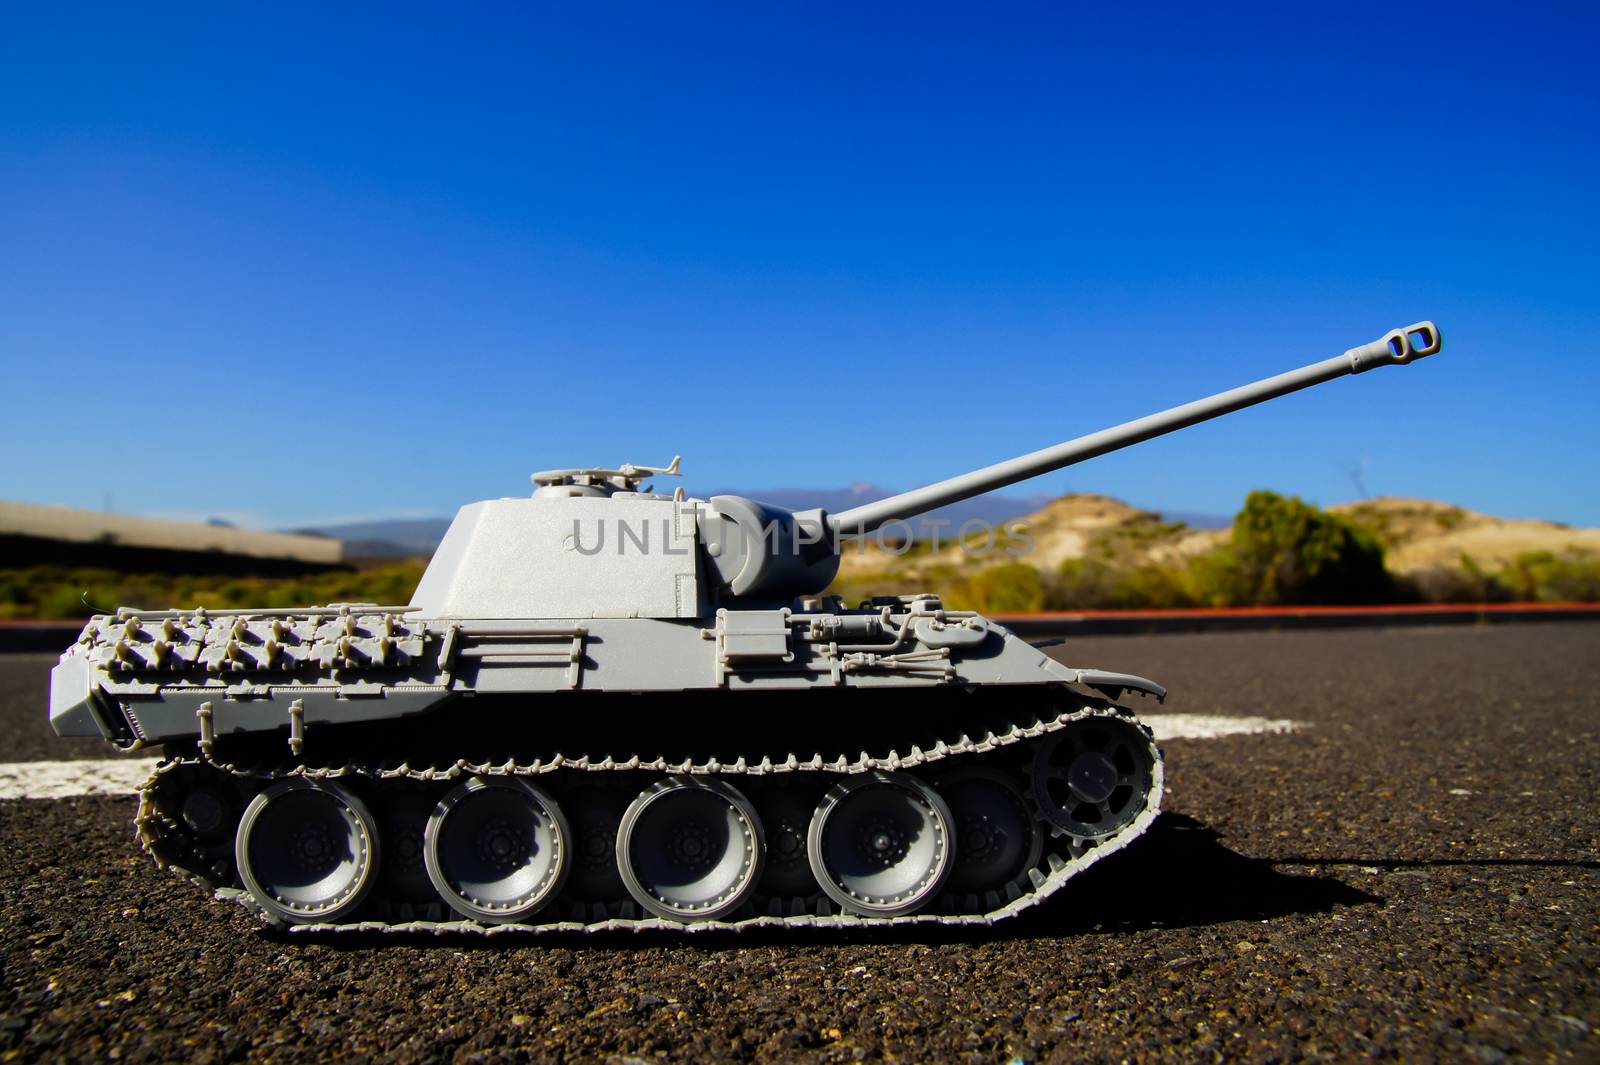 Modern War Concept Model Tank in the Middle of an Asphalt Road